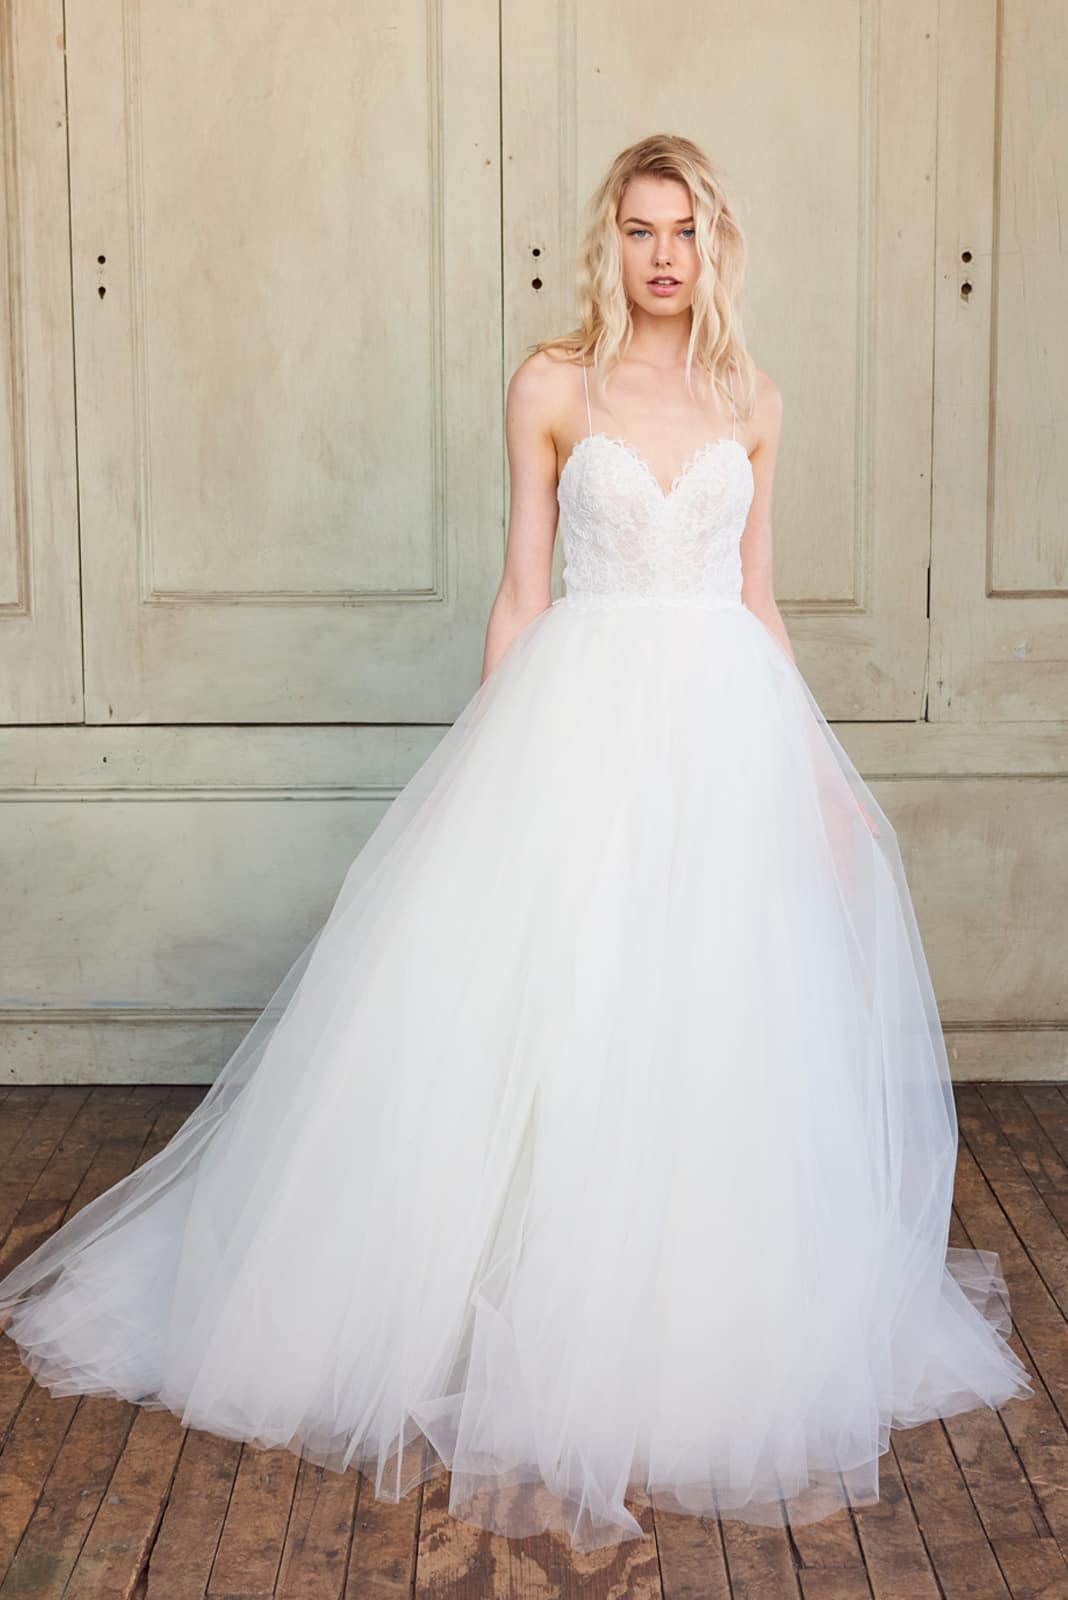 'Adelynn' by Christos : A Stunning Ballgown Lace Back Wedding Dress ...